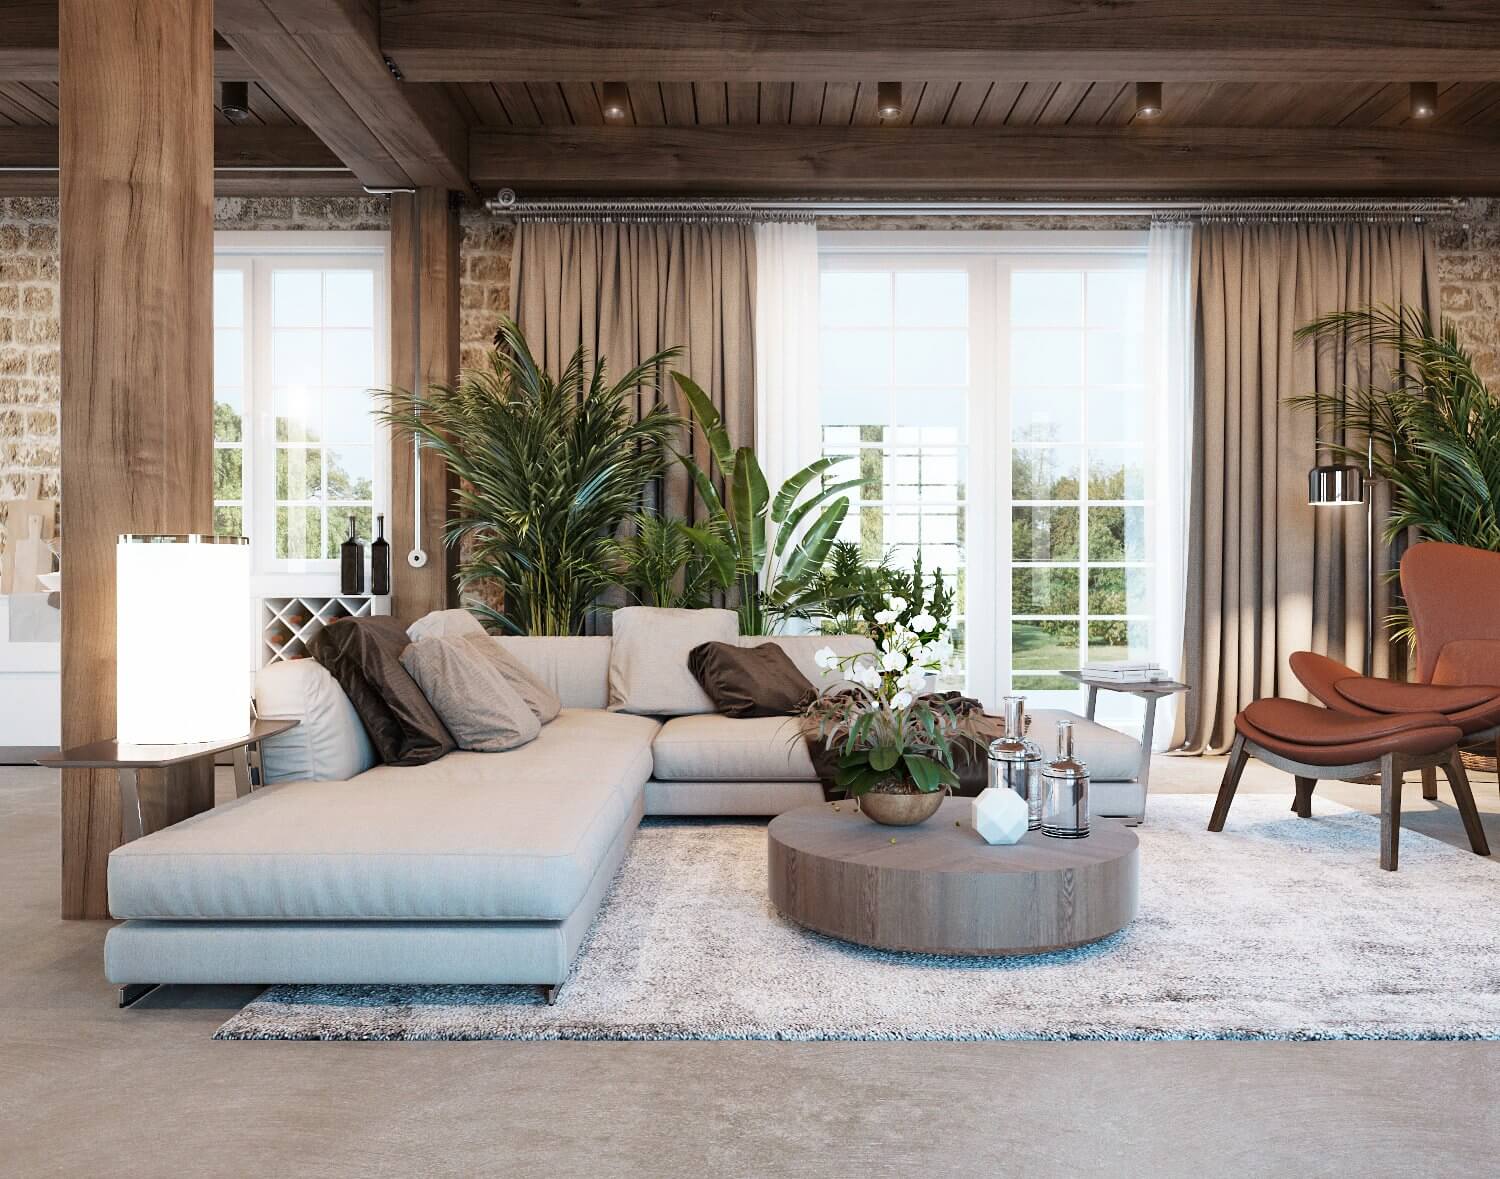 The Villa in Italy living room lounge sofa - cgi visualization